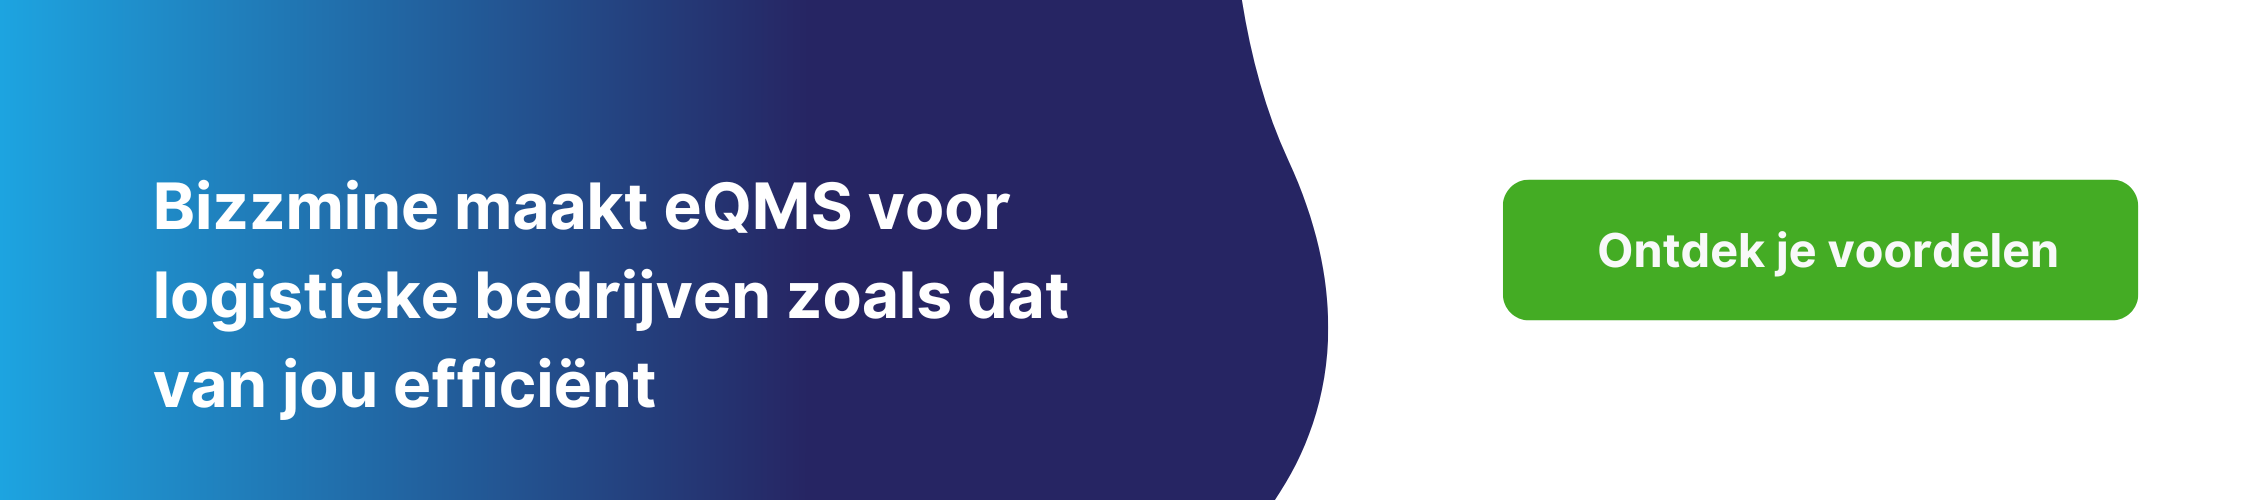 CTA banners_testimonials_GDP_NL